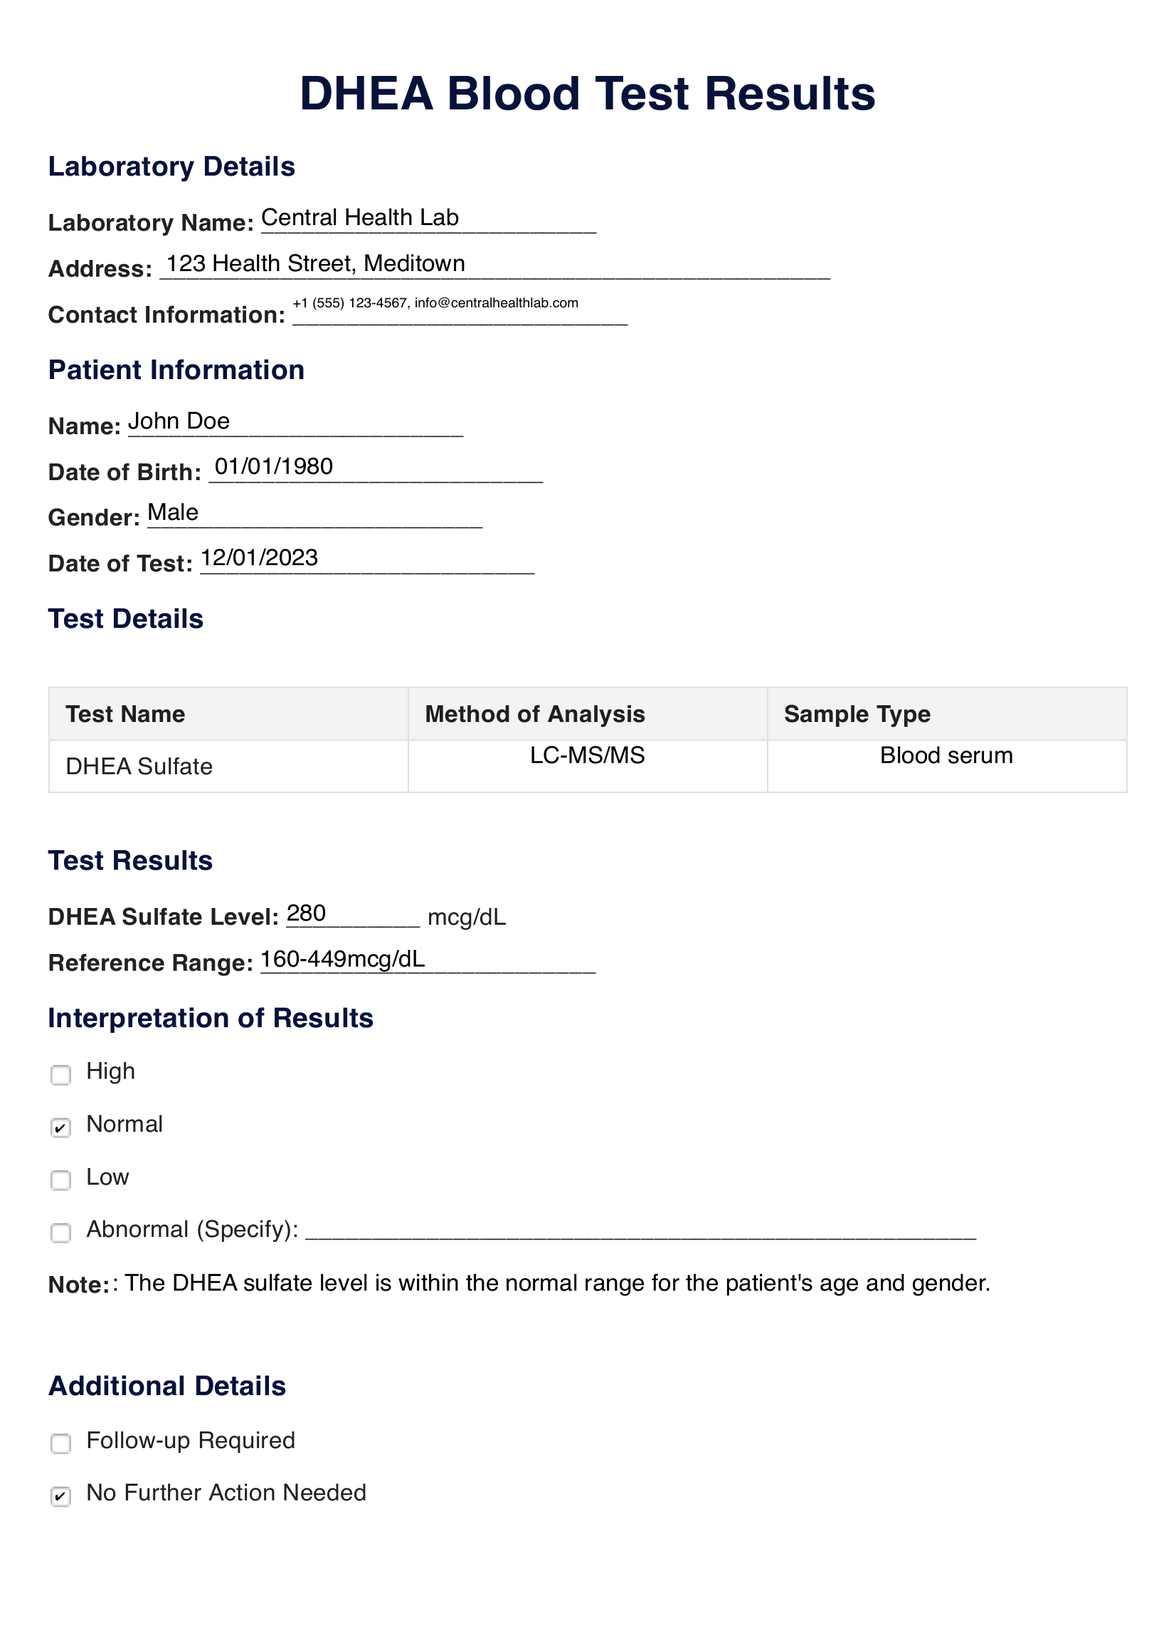 DHEAS blood test PDF Example